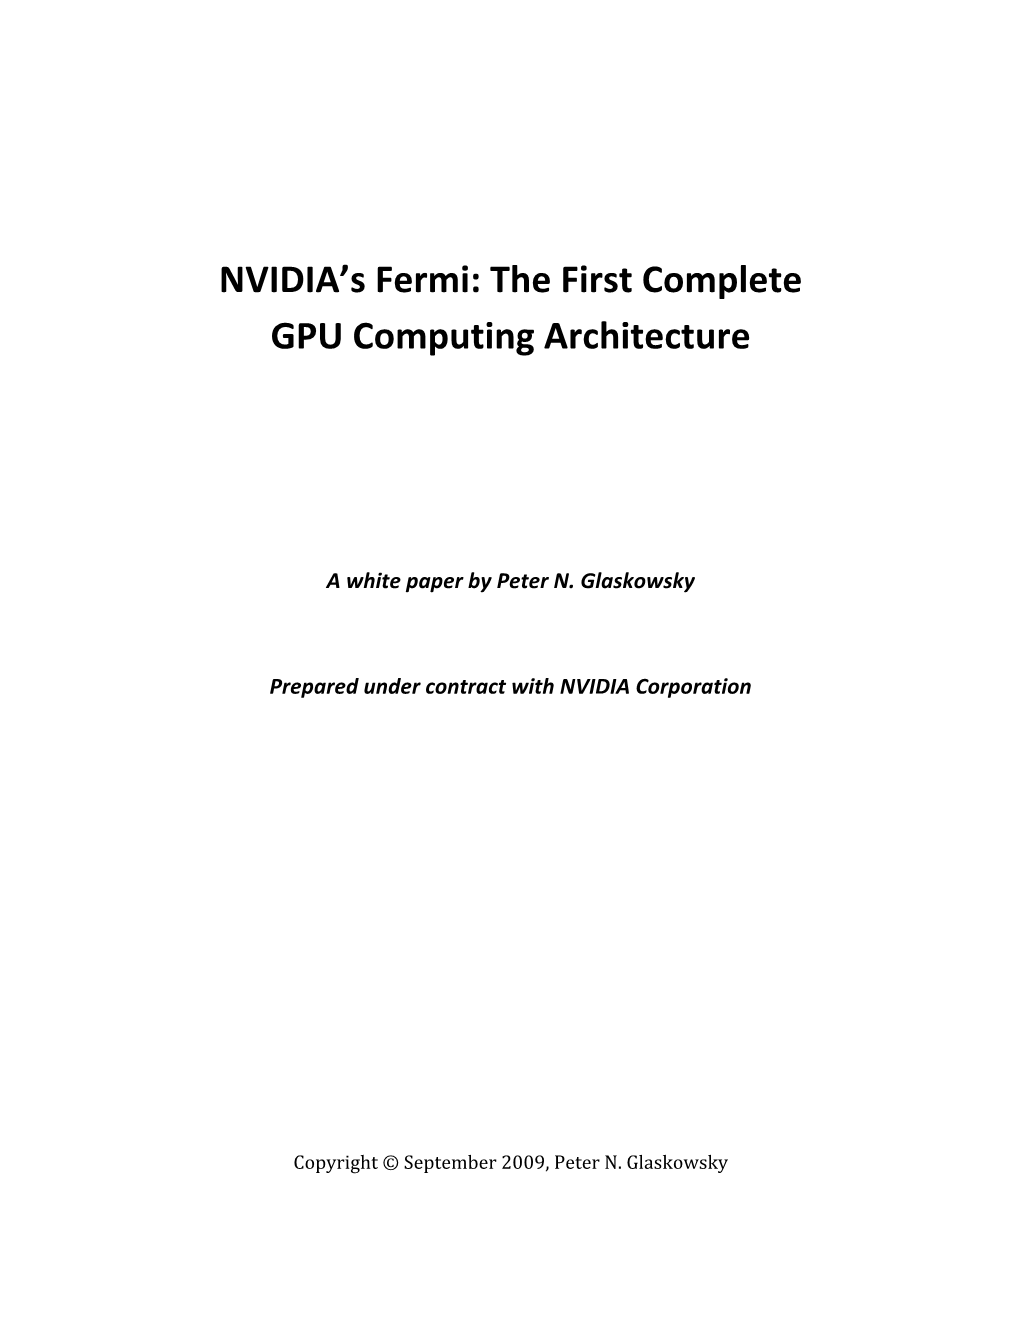 NVIDIA's Fermi: the First Complete GPU Computing Architecture